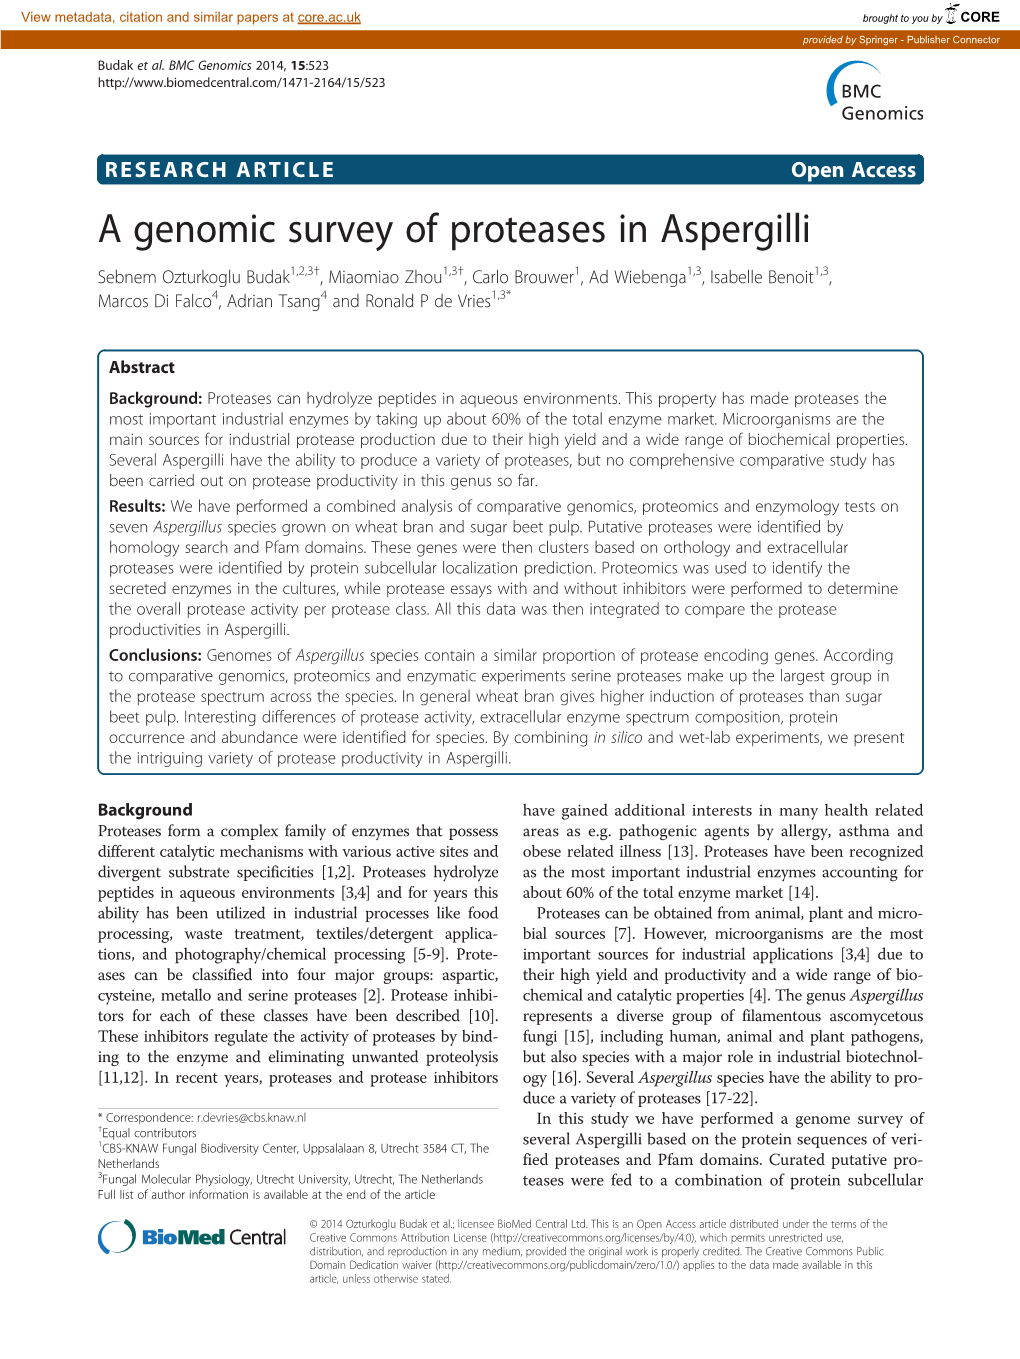 A Genomic Survey of Proteases in Aspergilli